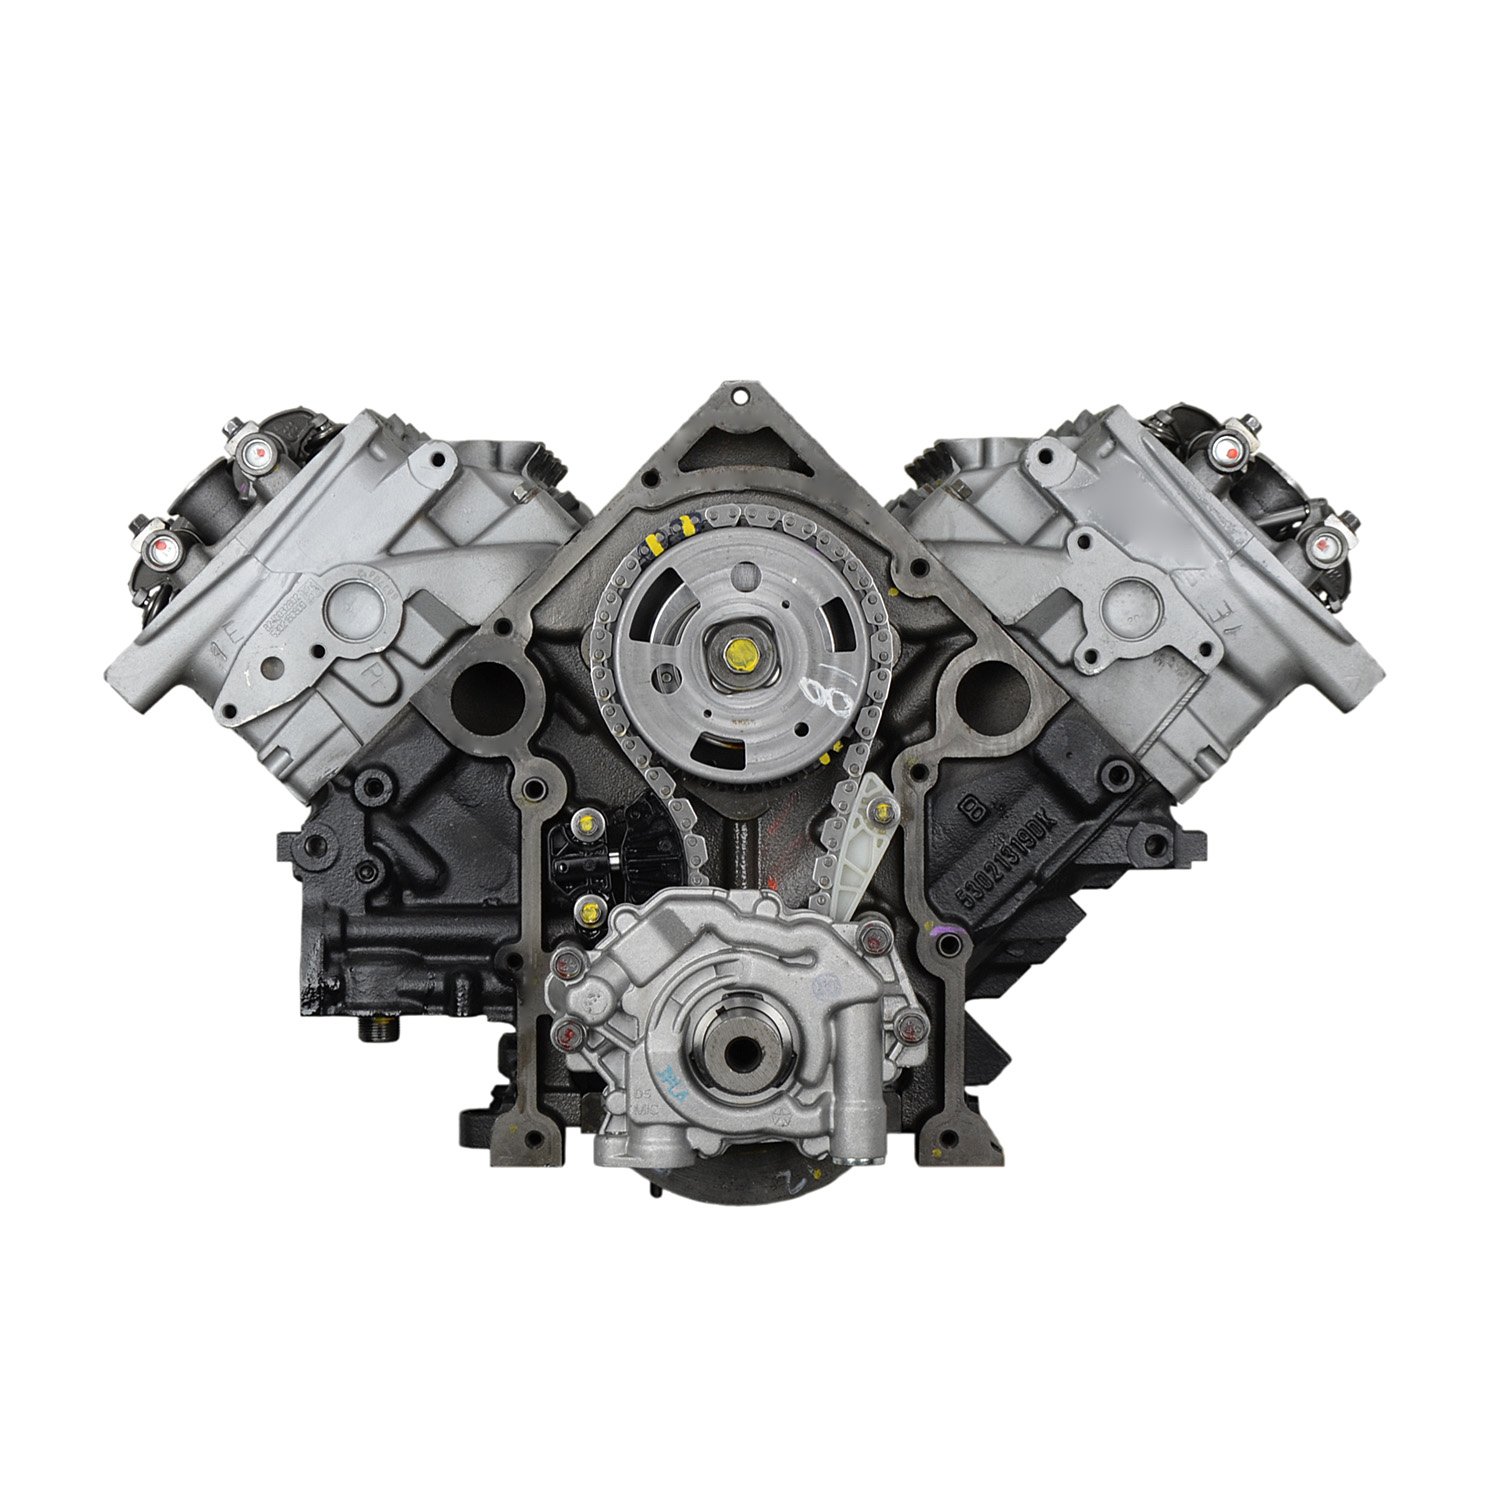 DDM2 Remanufactured Crate Engine for 2010-2014 Chrysler/Dodge/Jeep with 5.7L HEMI V8